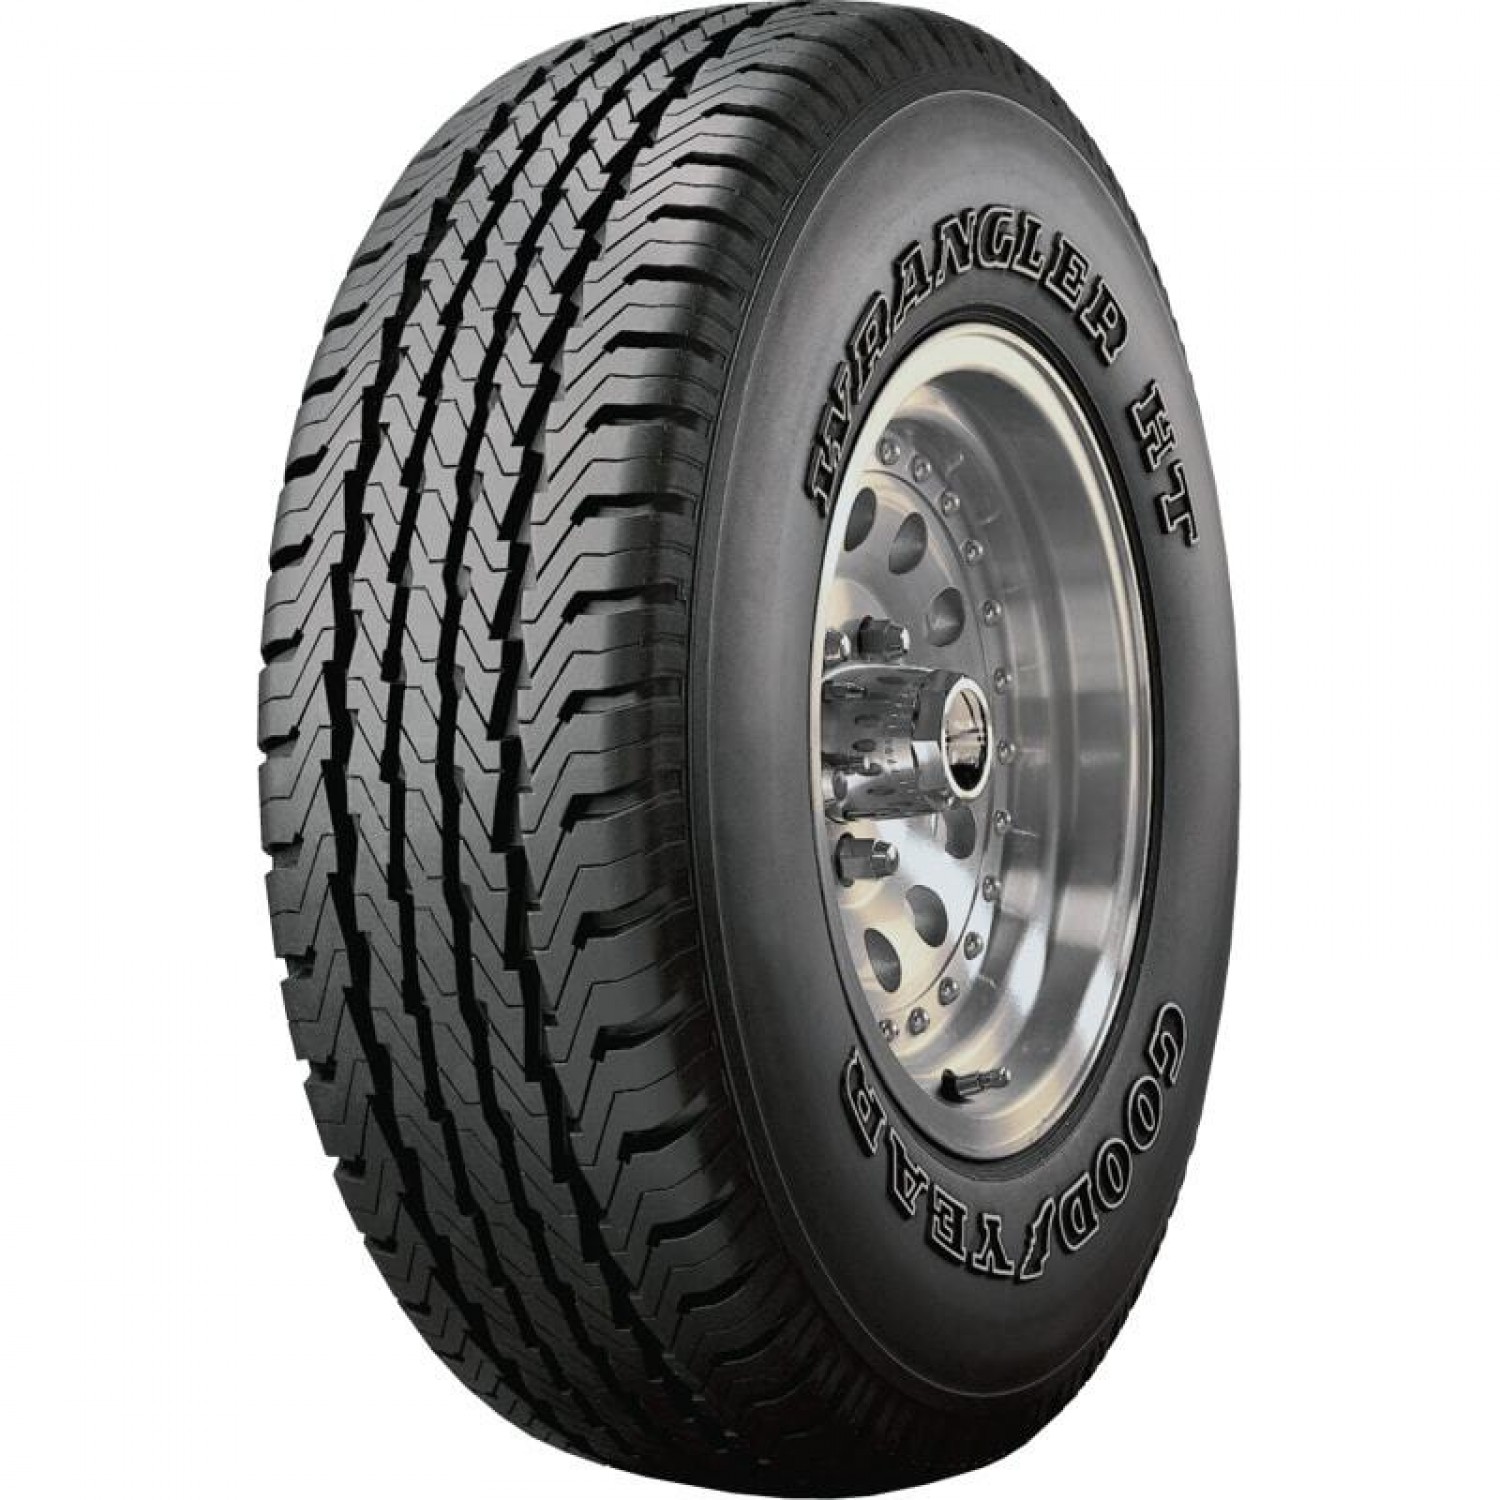 Goodyear Wrangler HT Black Sidewall Tire (LT245/75R16 120R) vzn121152